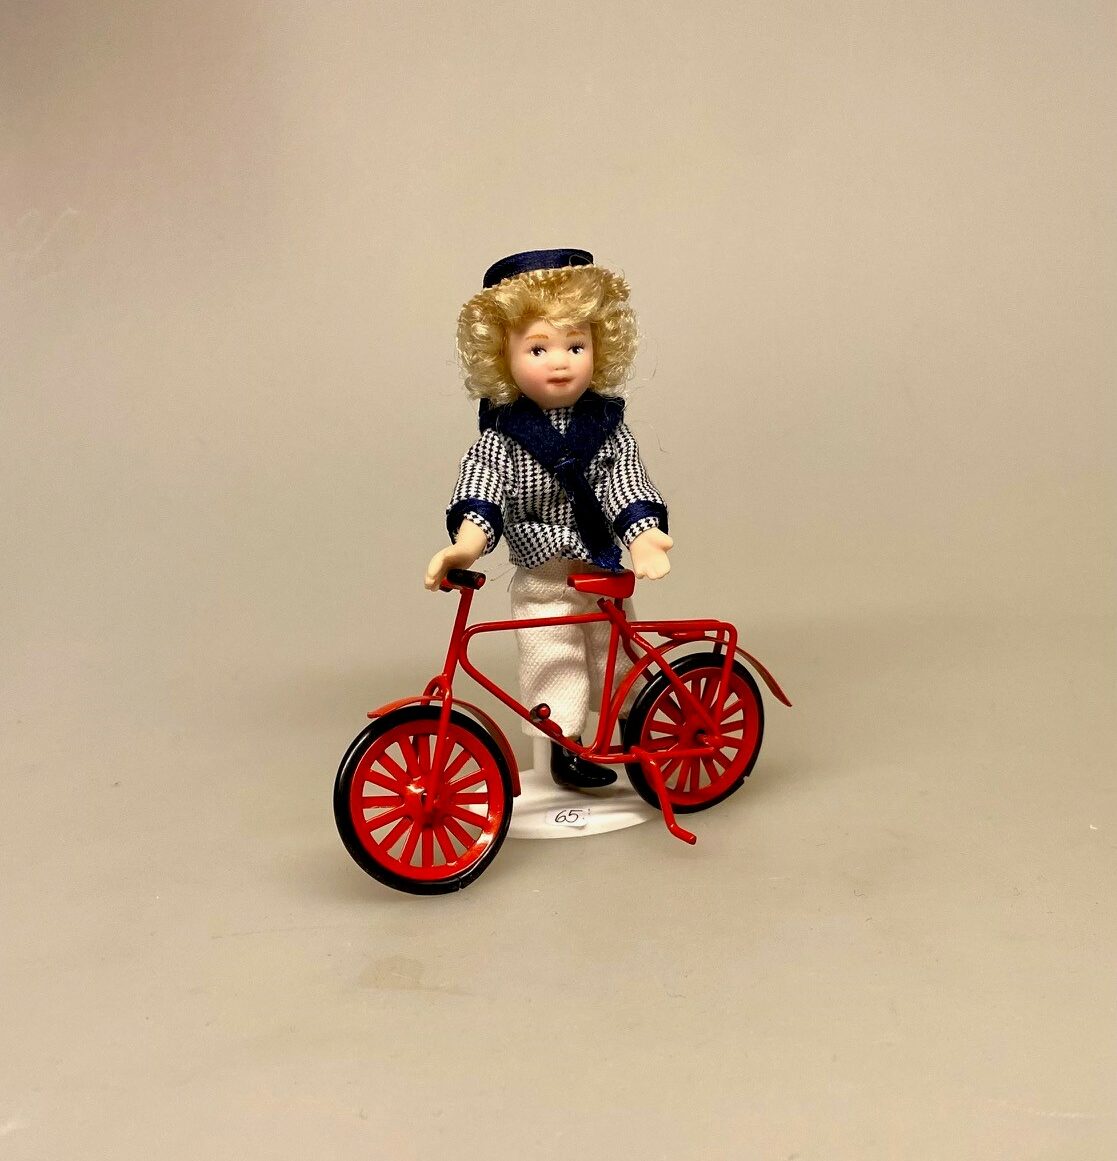 Kun én af Hver - Miniature Børnecykel, cykel, barnecykel, dukkehus, ting, til, tilbehør, legetøj, dukkehustilbehør, dukkehusting, sangskjuler, konfirmation, sjov, miniature, cykel, børn, biti, ribe, symbolsk, gave pigecykel, drengecykel, 1:12